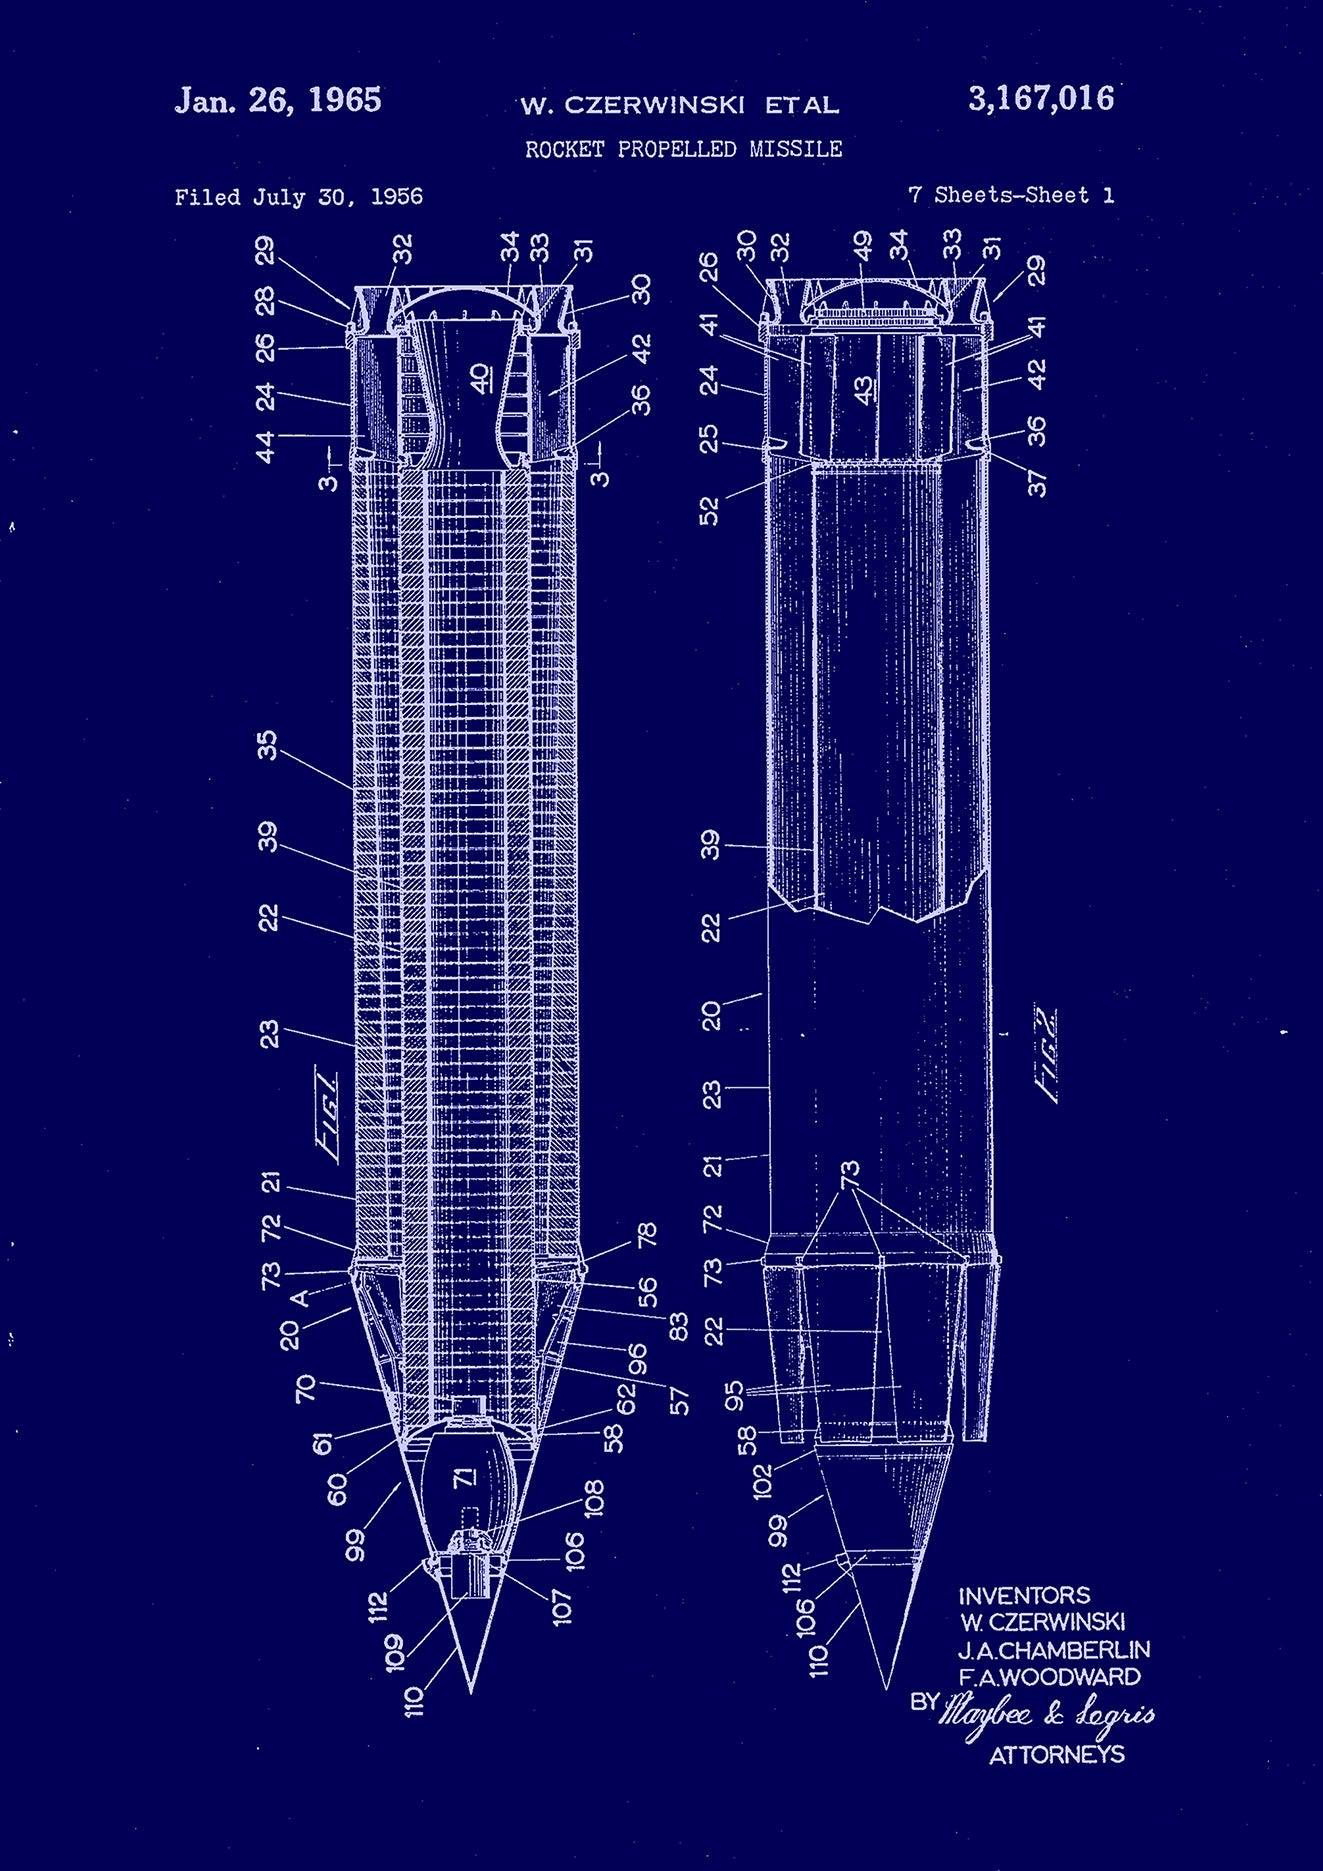 MISSILE ROCKET PRINTS: Patent Blueprint Artwork - Pimlico Prints